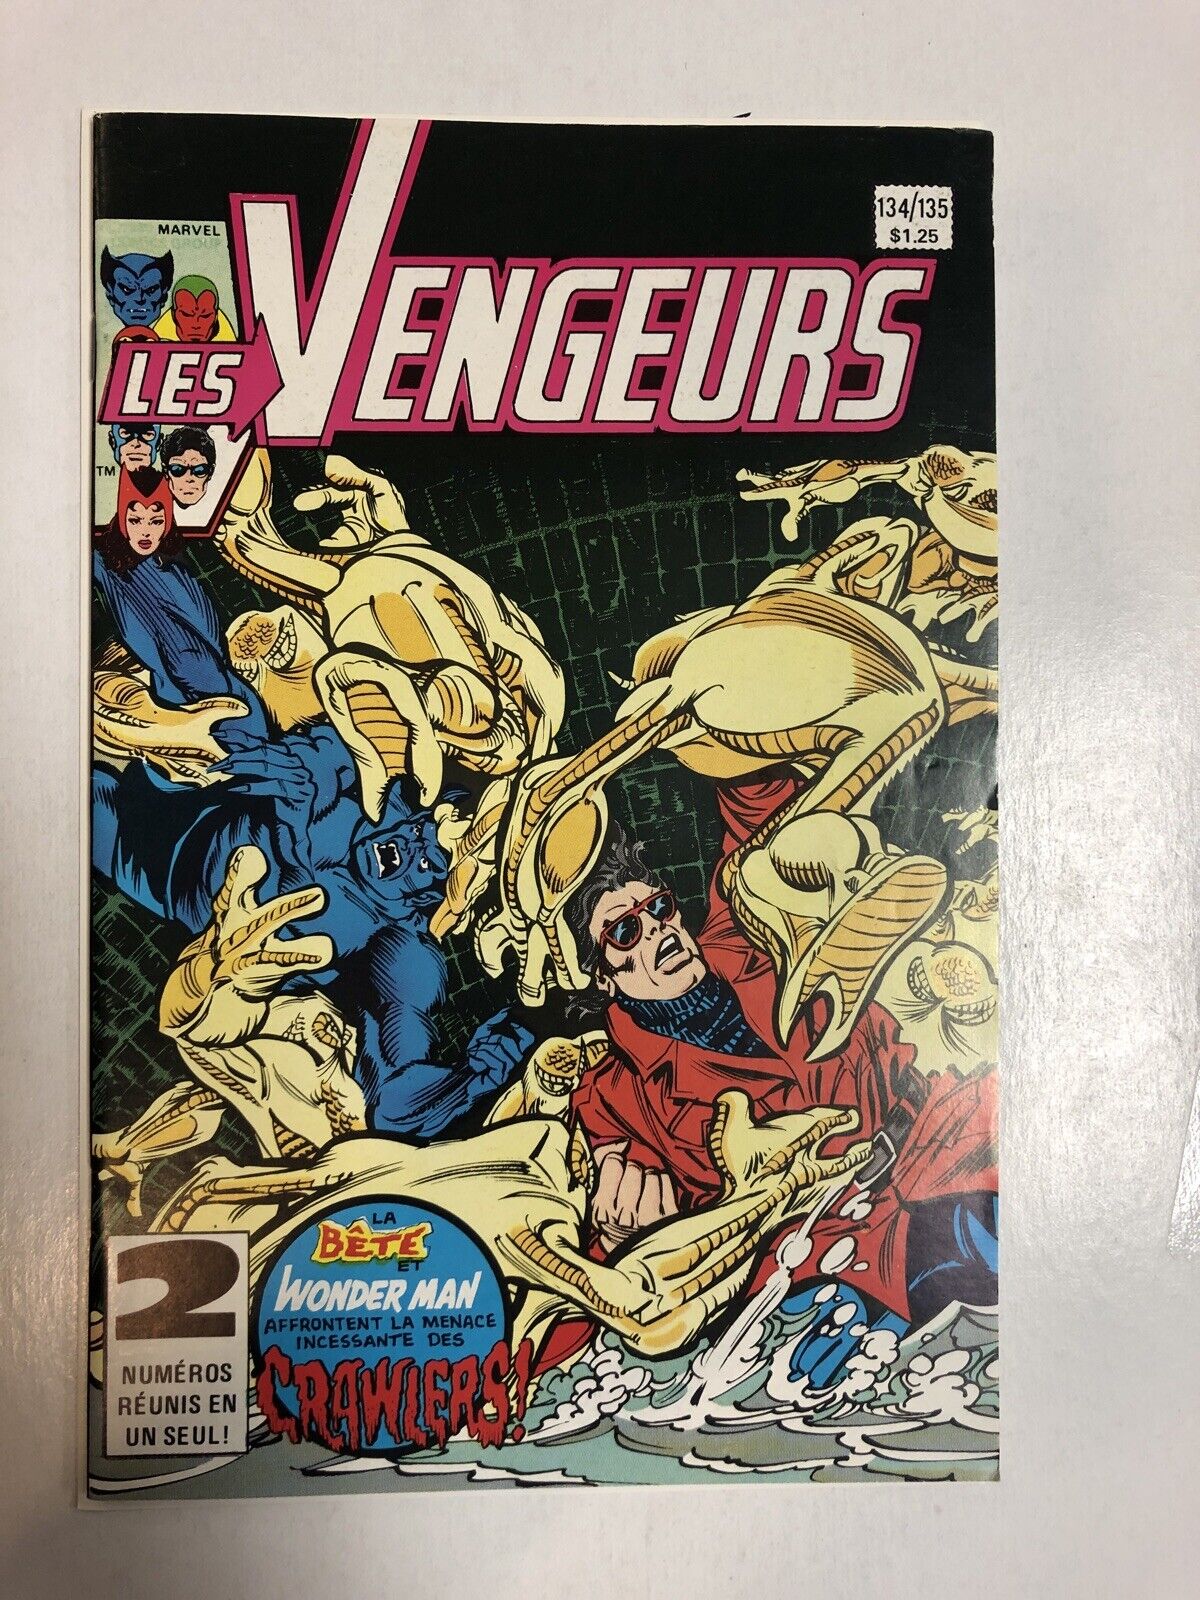 Les Vengeurs (1984) # 134 135 Heritage (Avengers # 203-204)